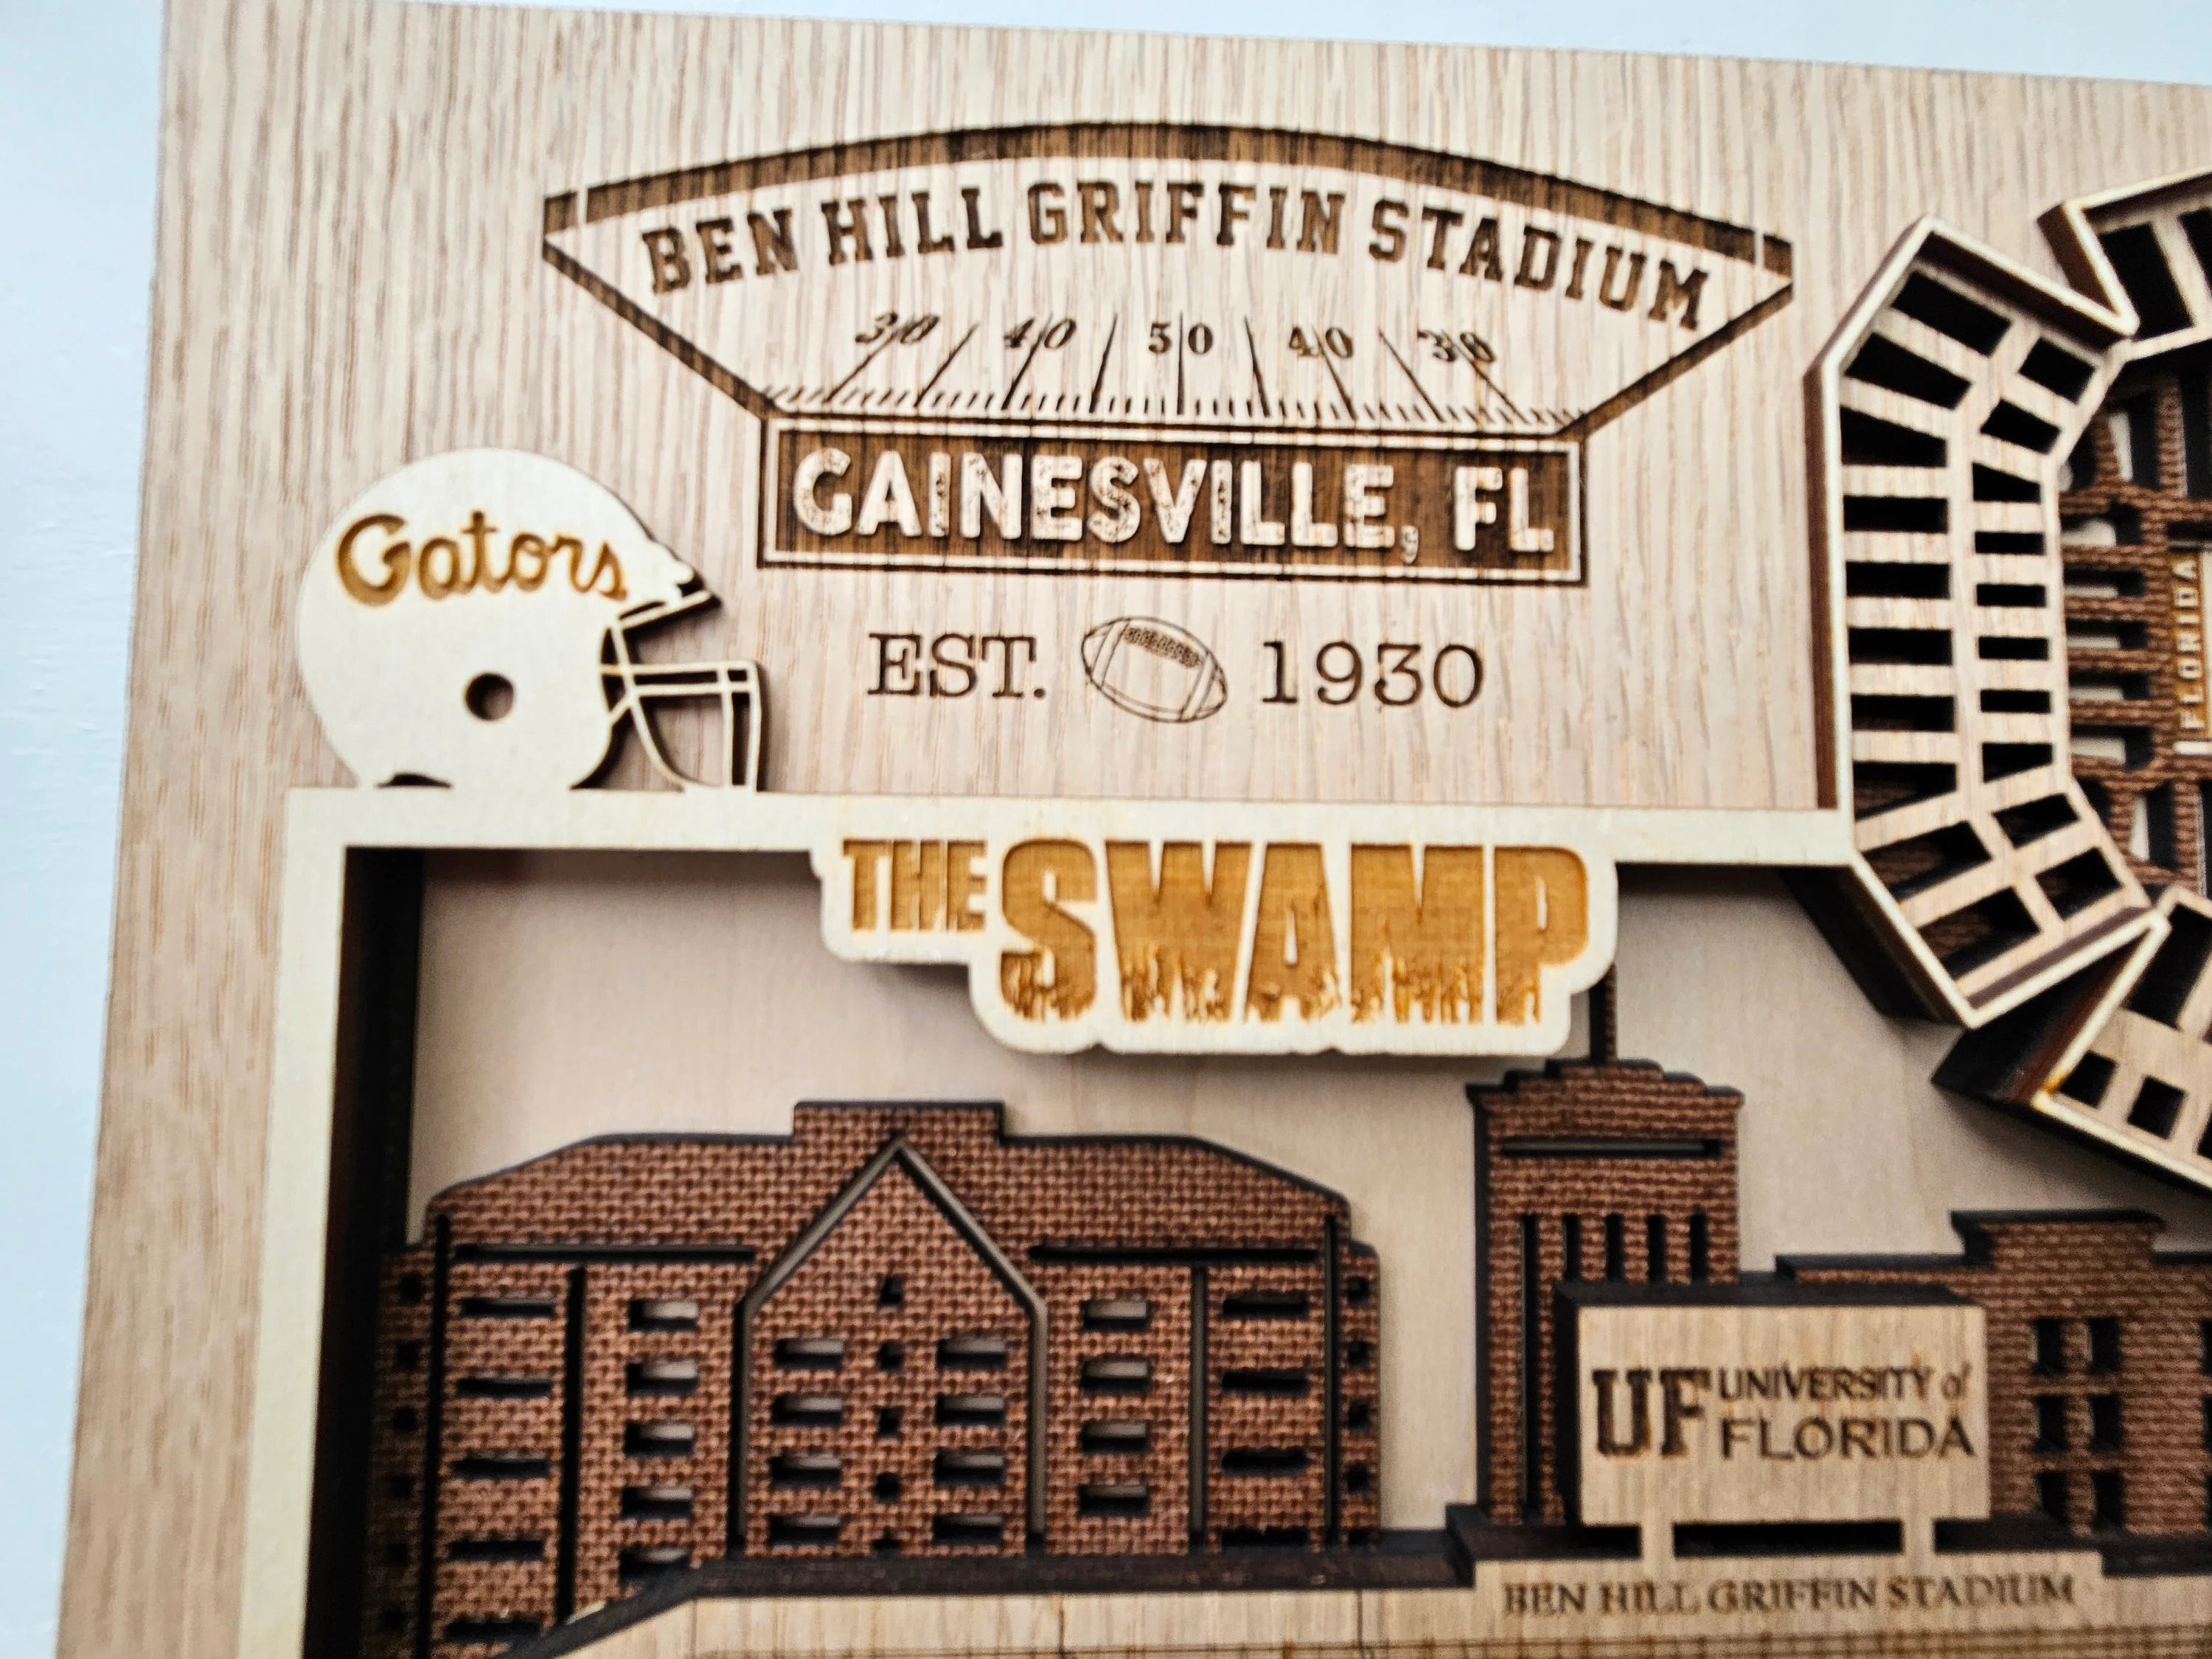 Ben Hill Griffin Stadium - Home of Florida Gators